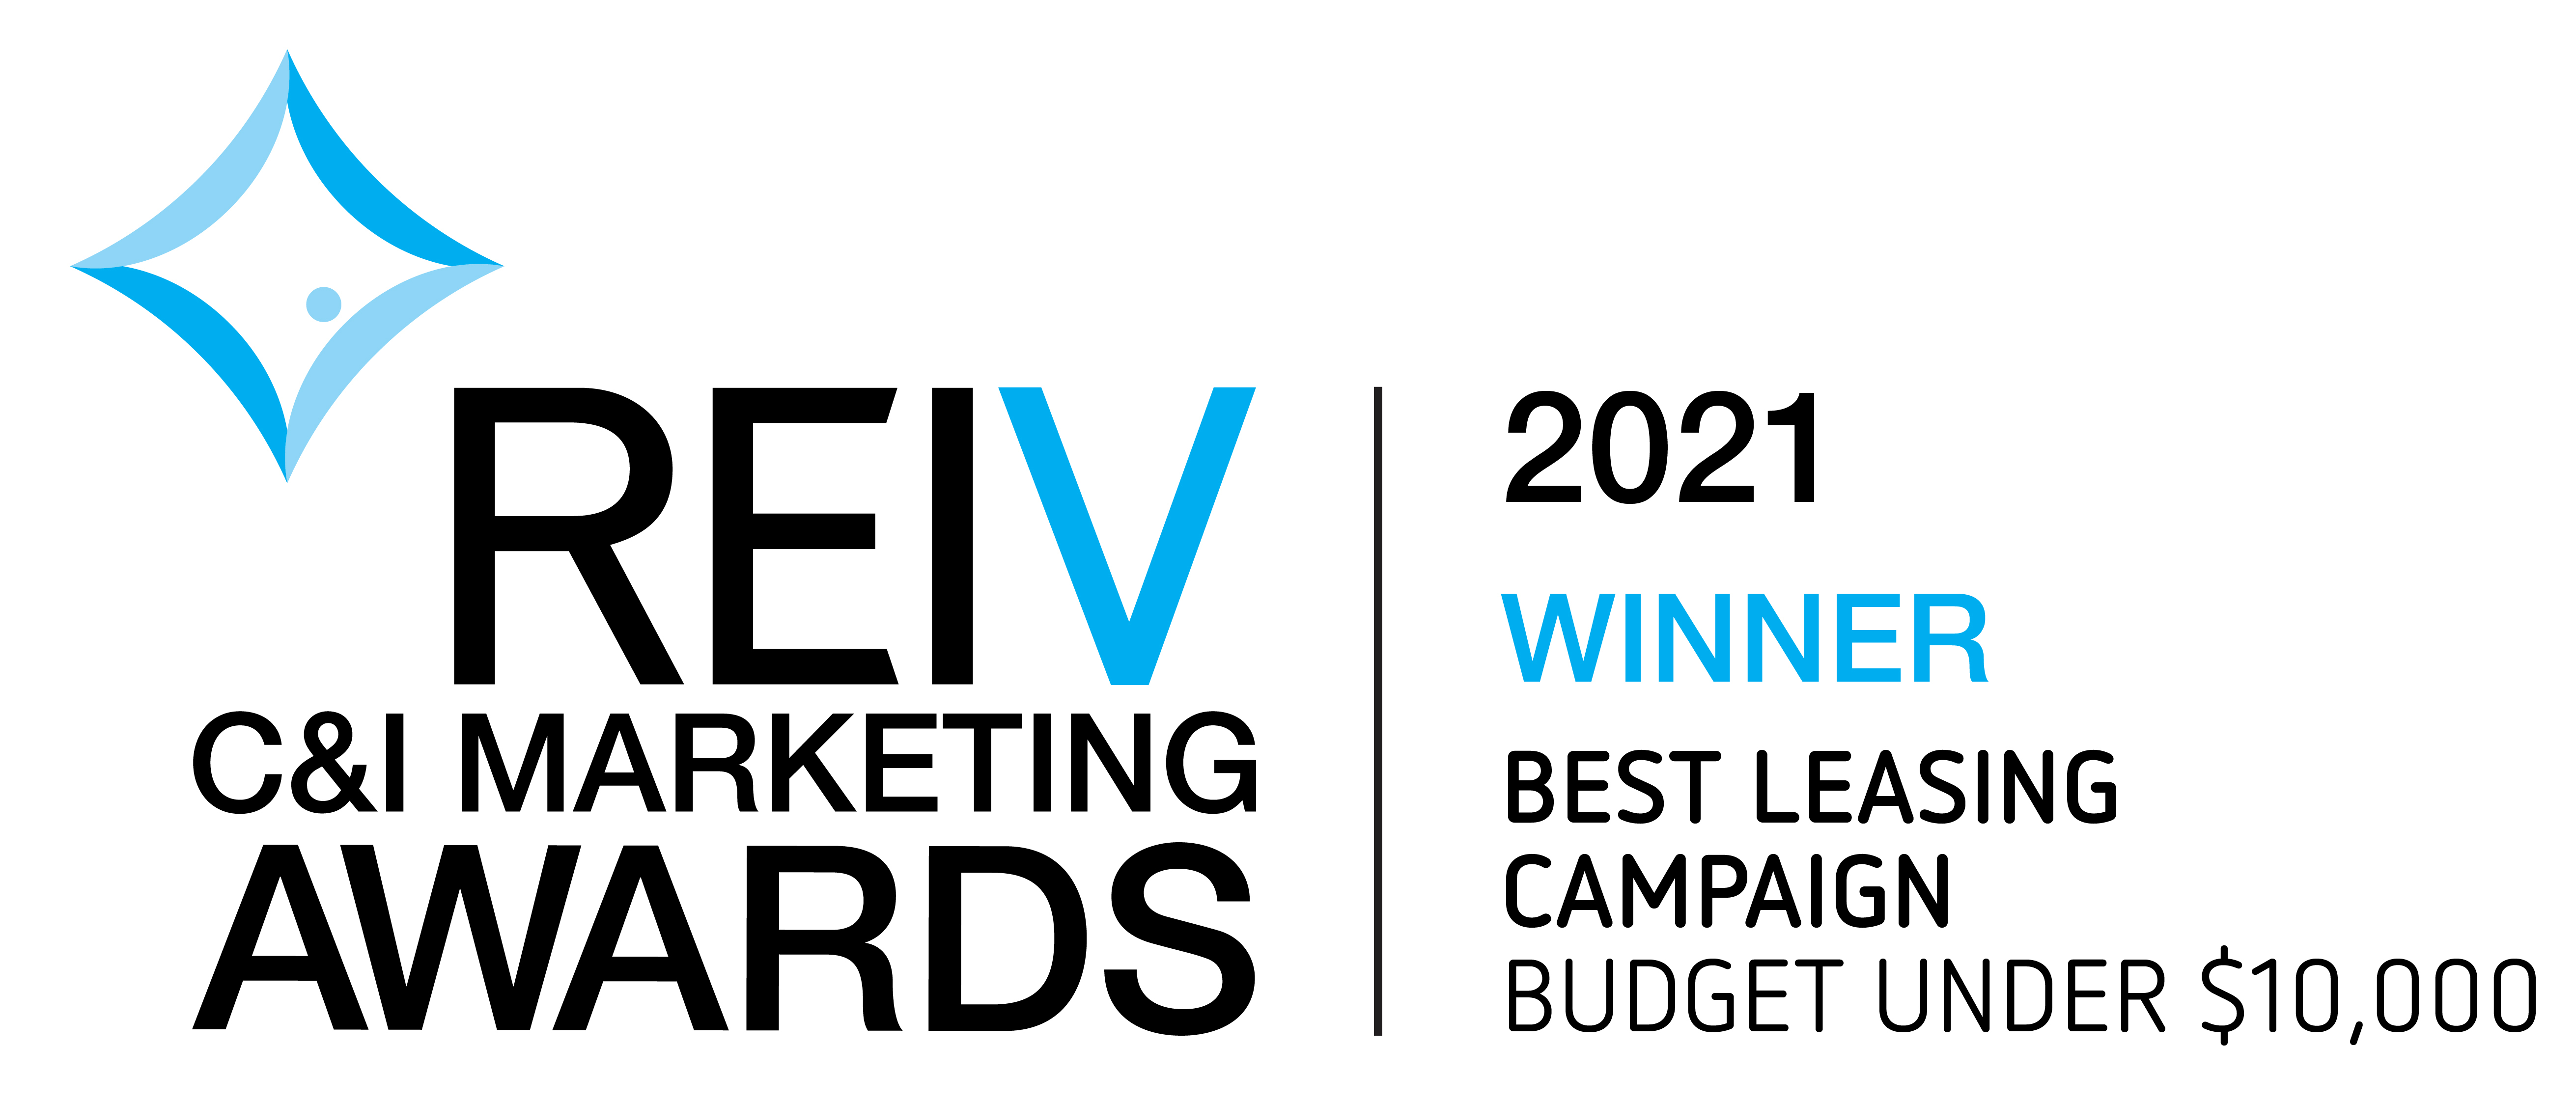 2021 WINNER CI Marketing Awards Best Leasing Campaign Budget Under 10 K